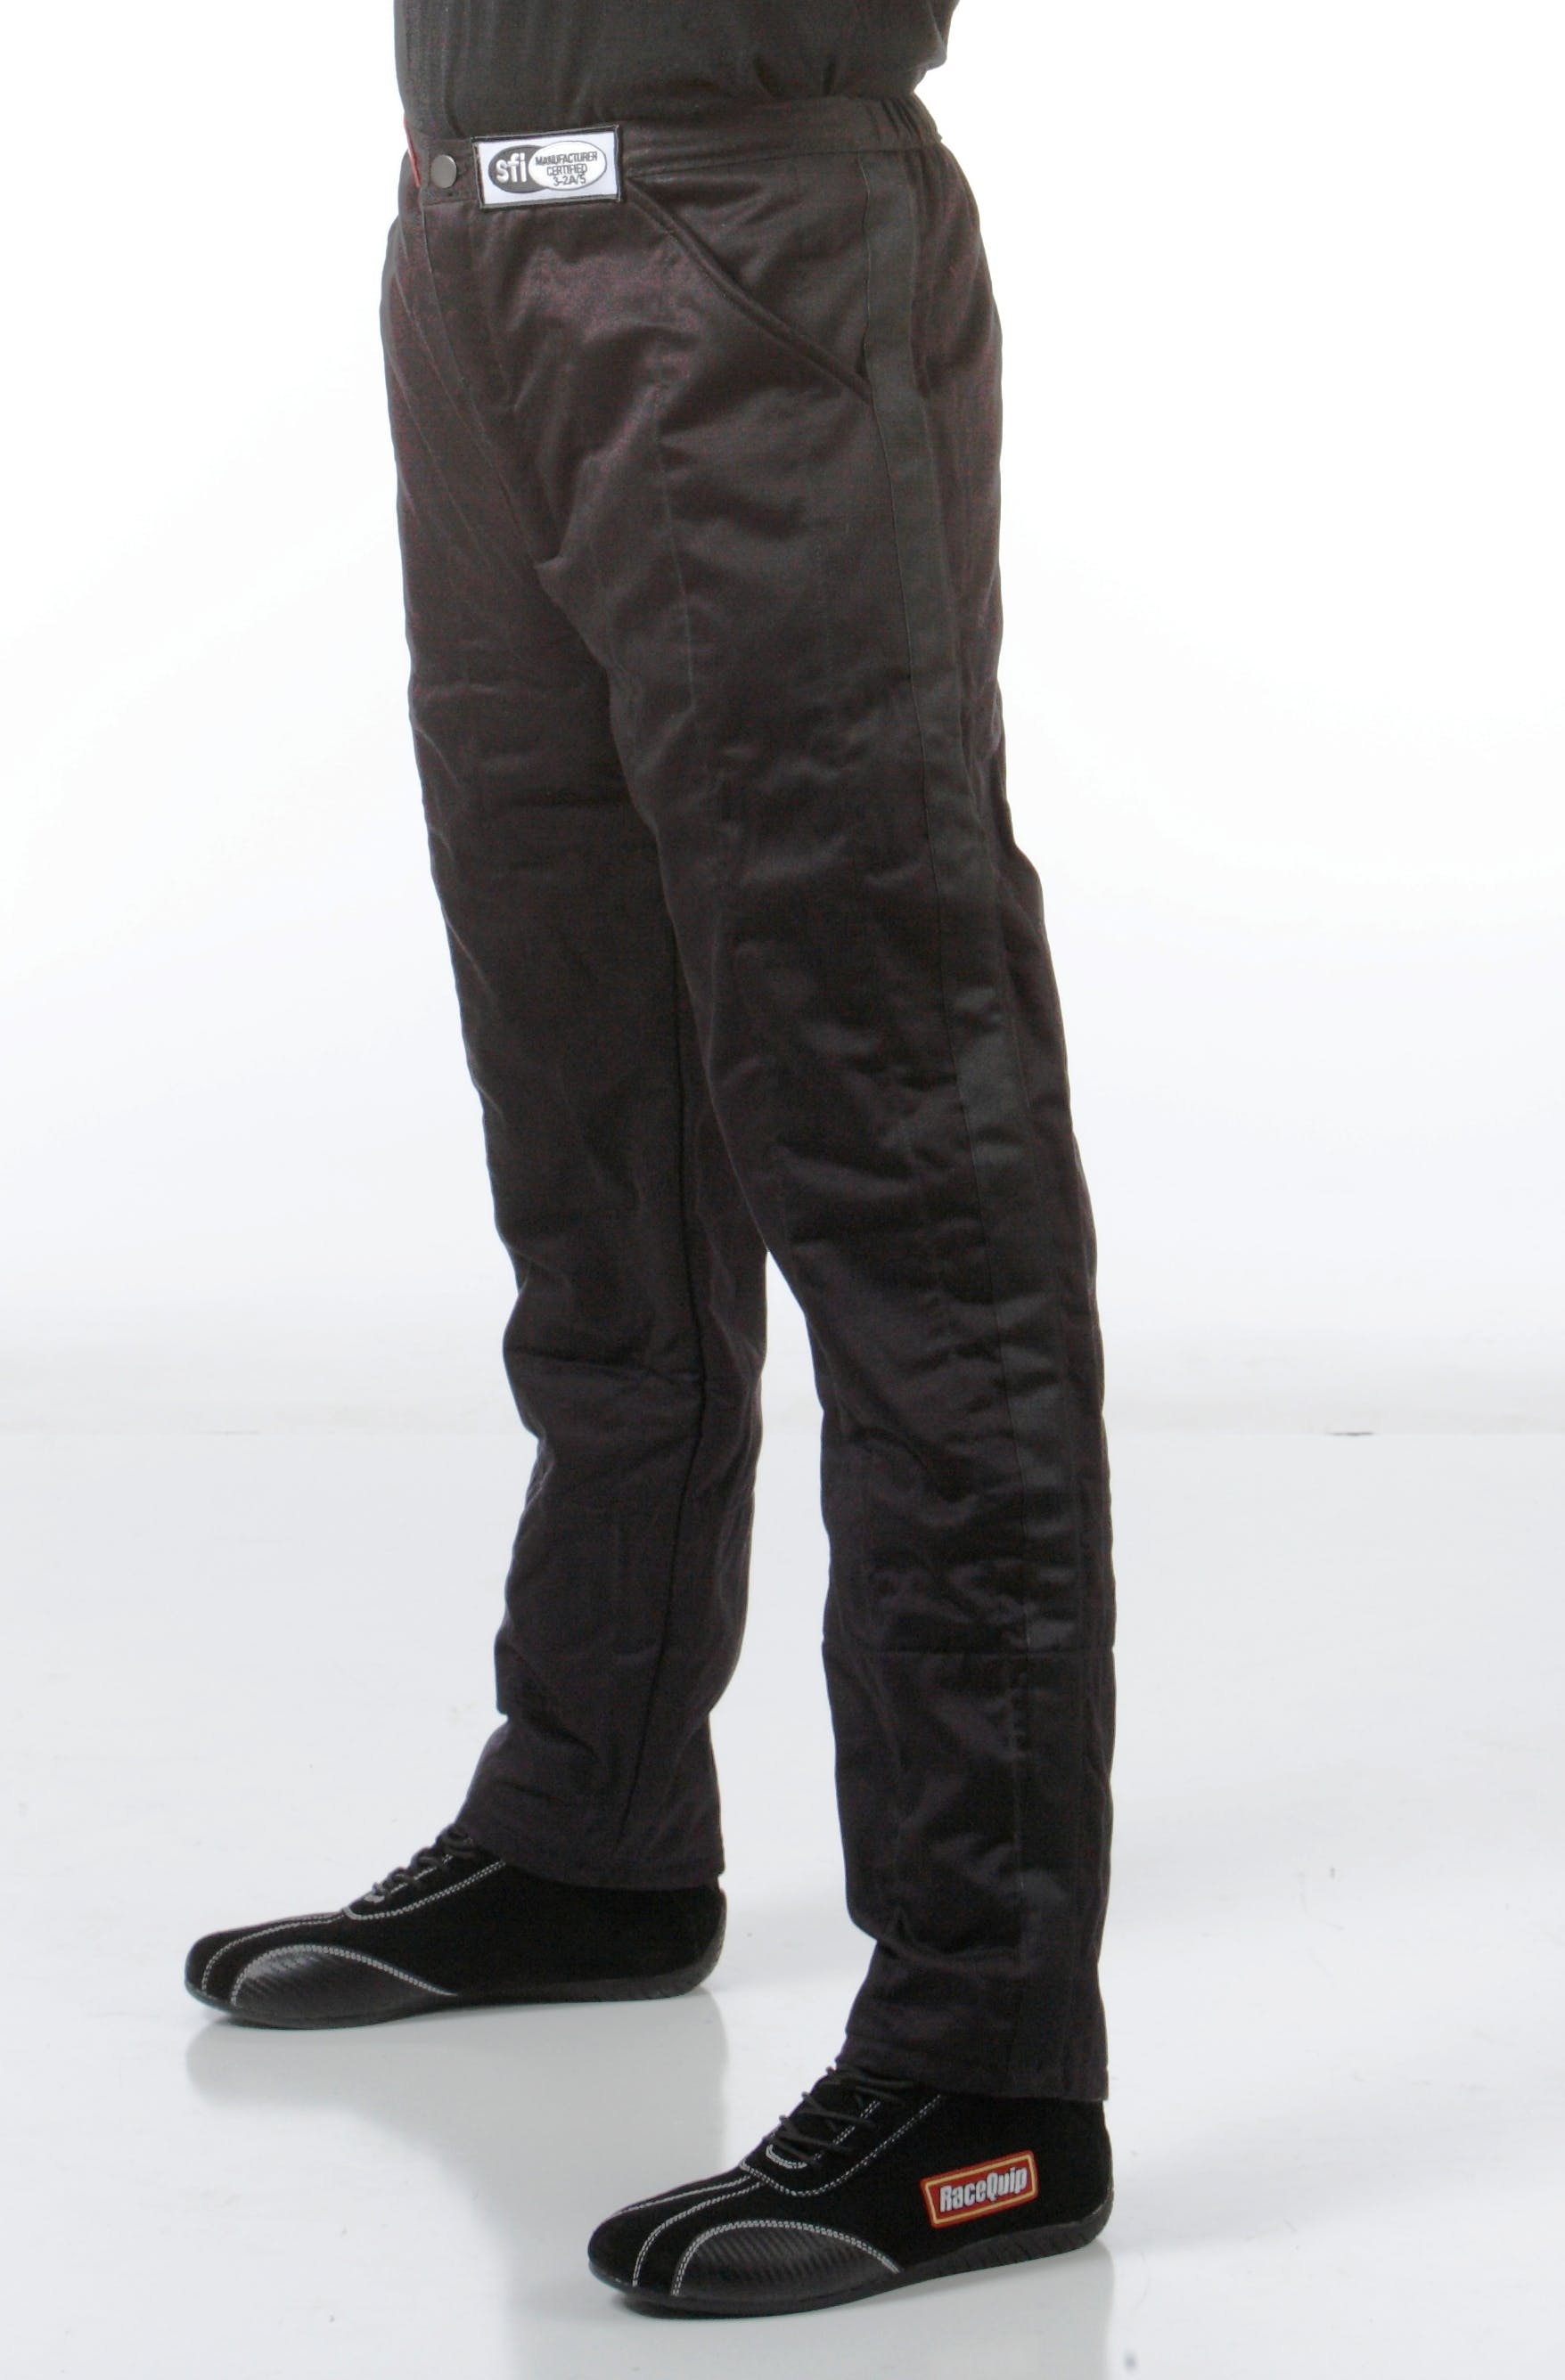 RaceQuip 122002 SFI-5 Pyrovatex Multi-Layer Racing Fire Pants (Black, Small)